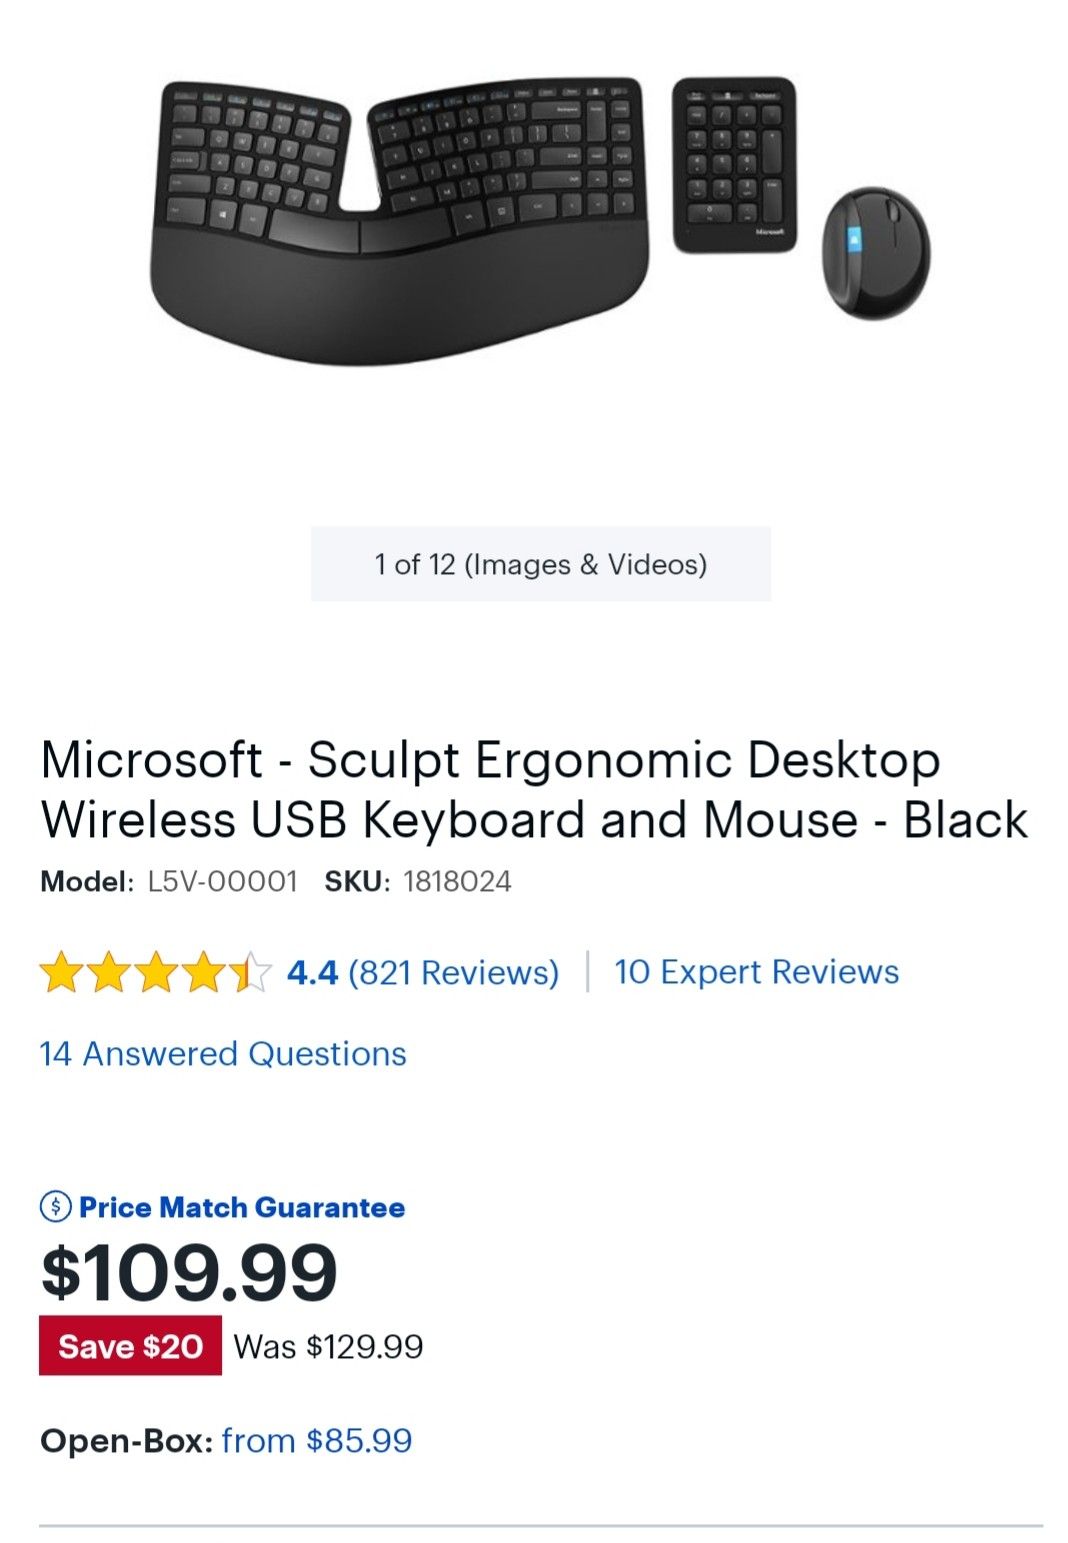 Sculpt ergonomic USB black wireless keyboard and mouse